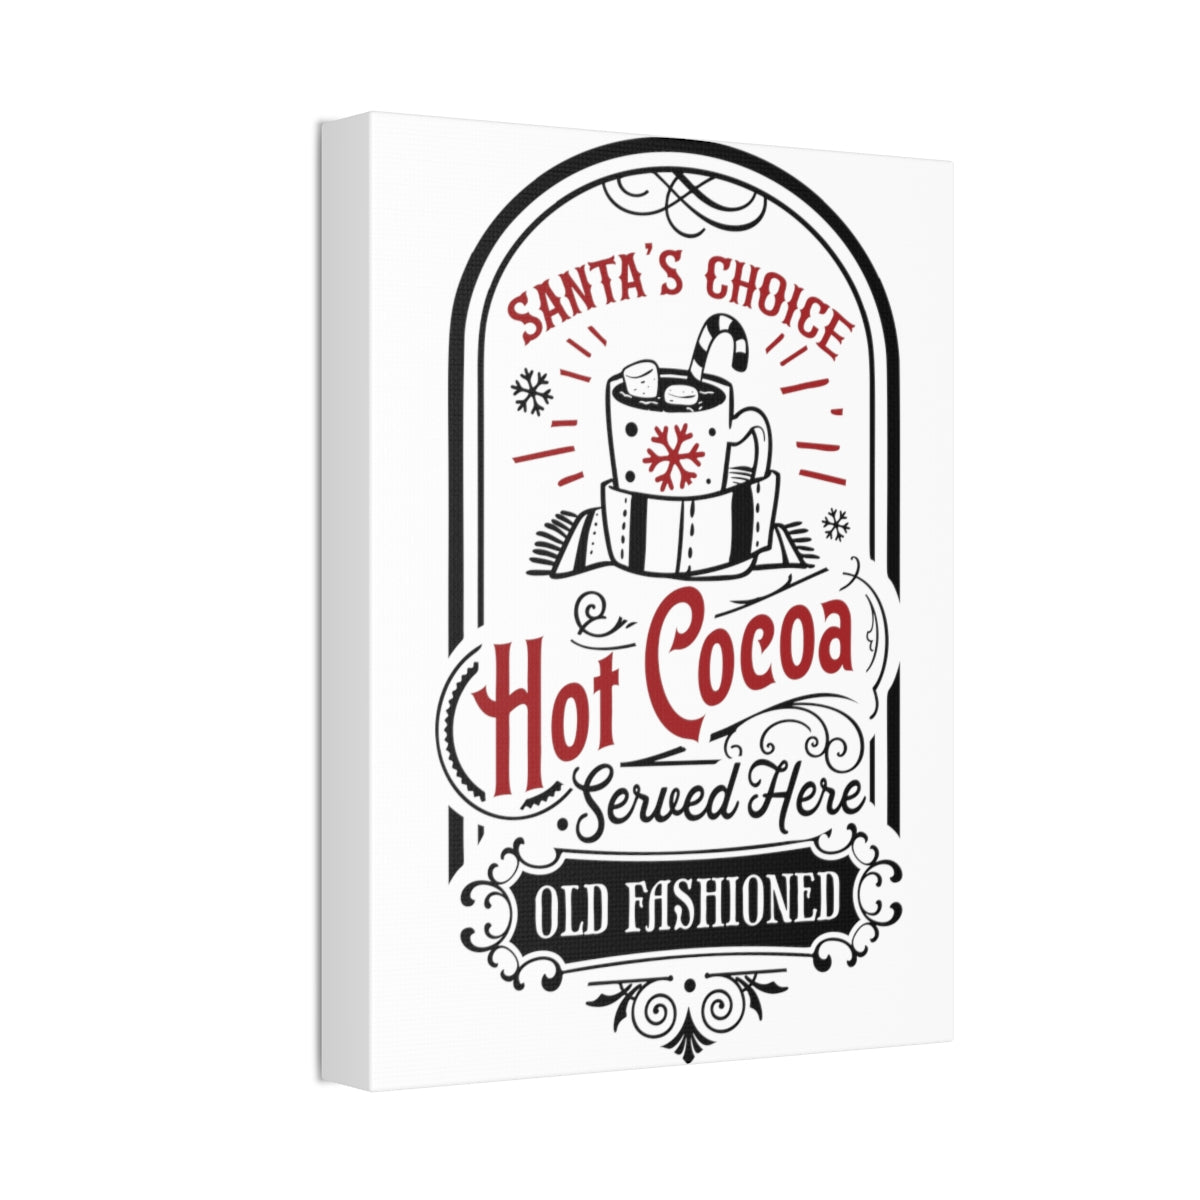 Farmhouse Wall Art - Canvas Sign - Santa's Choice Hot Cocoa